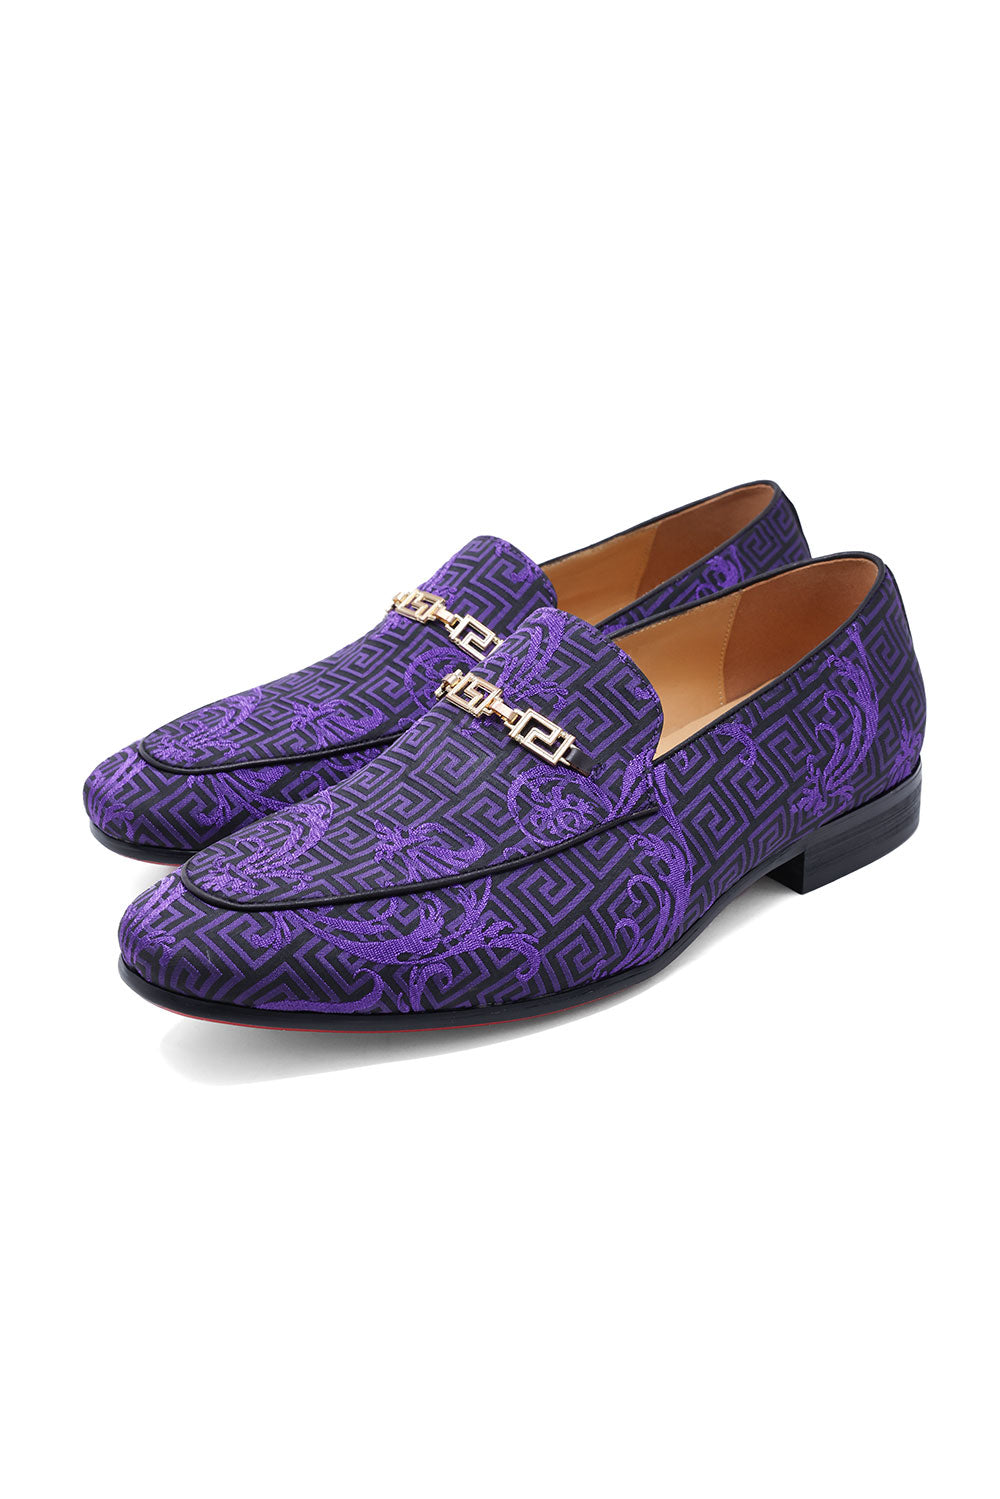 BARABAS Men's Greek Pattern Floral  Baroque Prom Dress Shoes SH3100 Purple